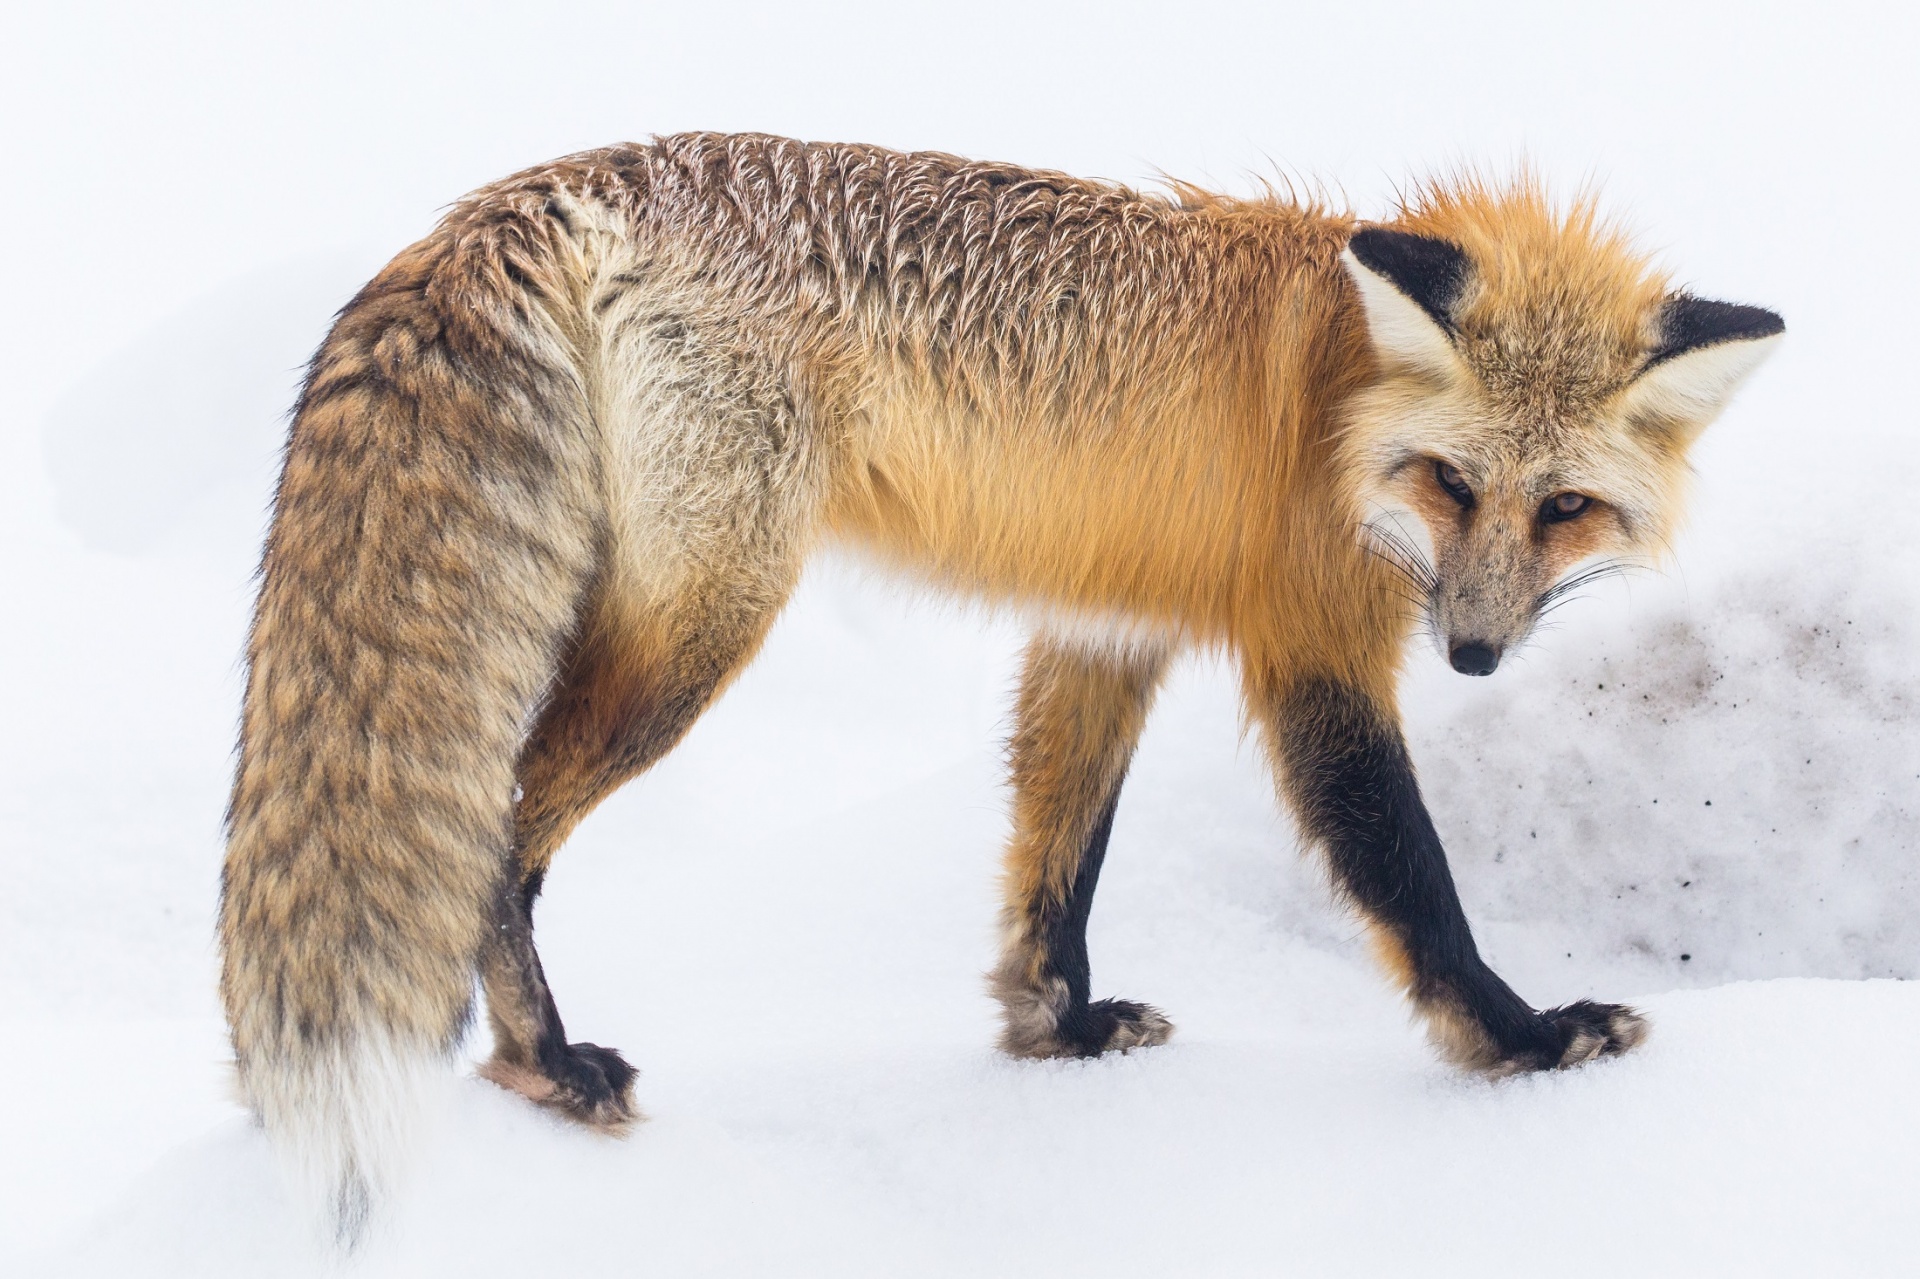 red fox portrait wildlife free photo